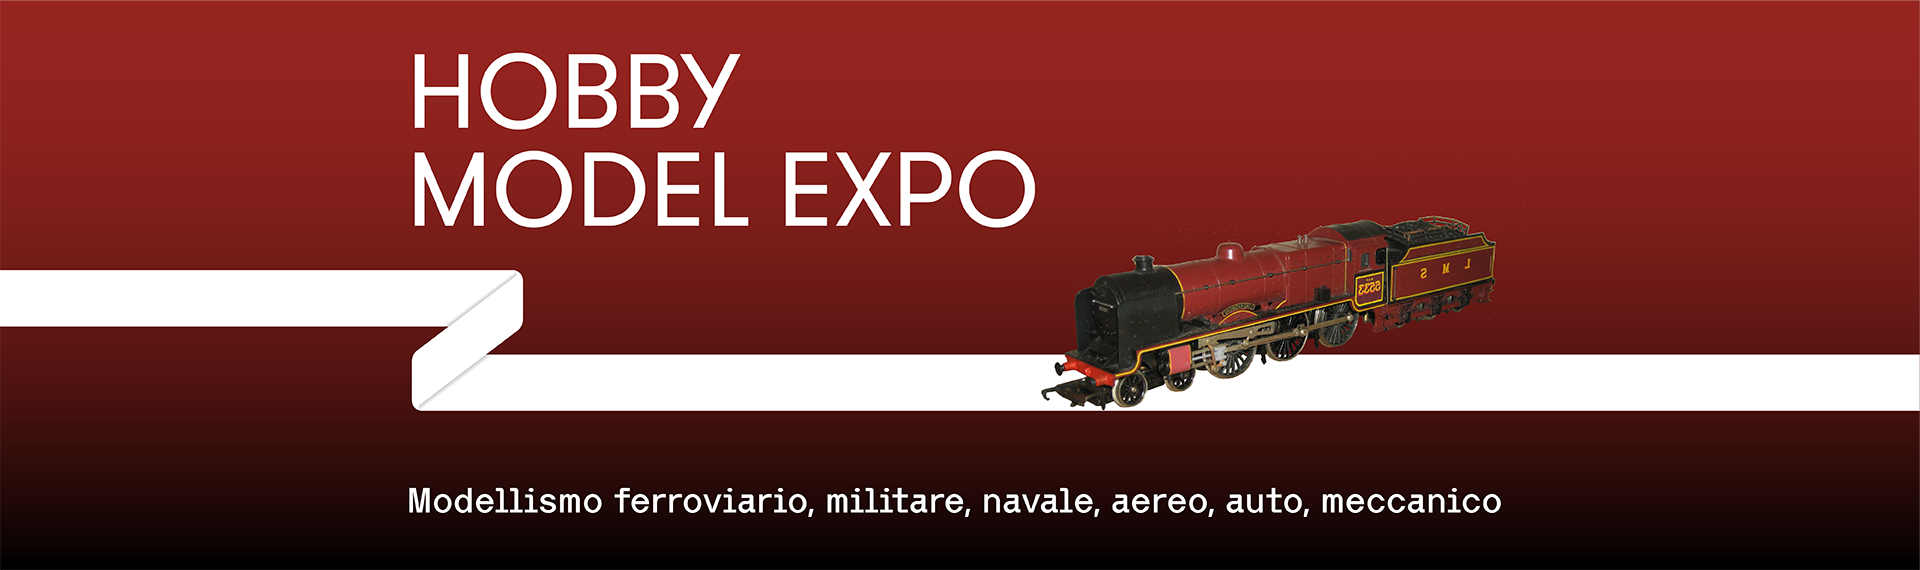 Hobby Model Expo - Parco Esposizioni Novegro